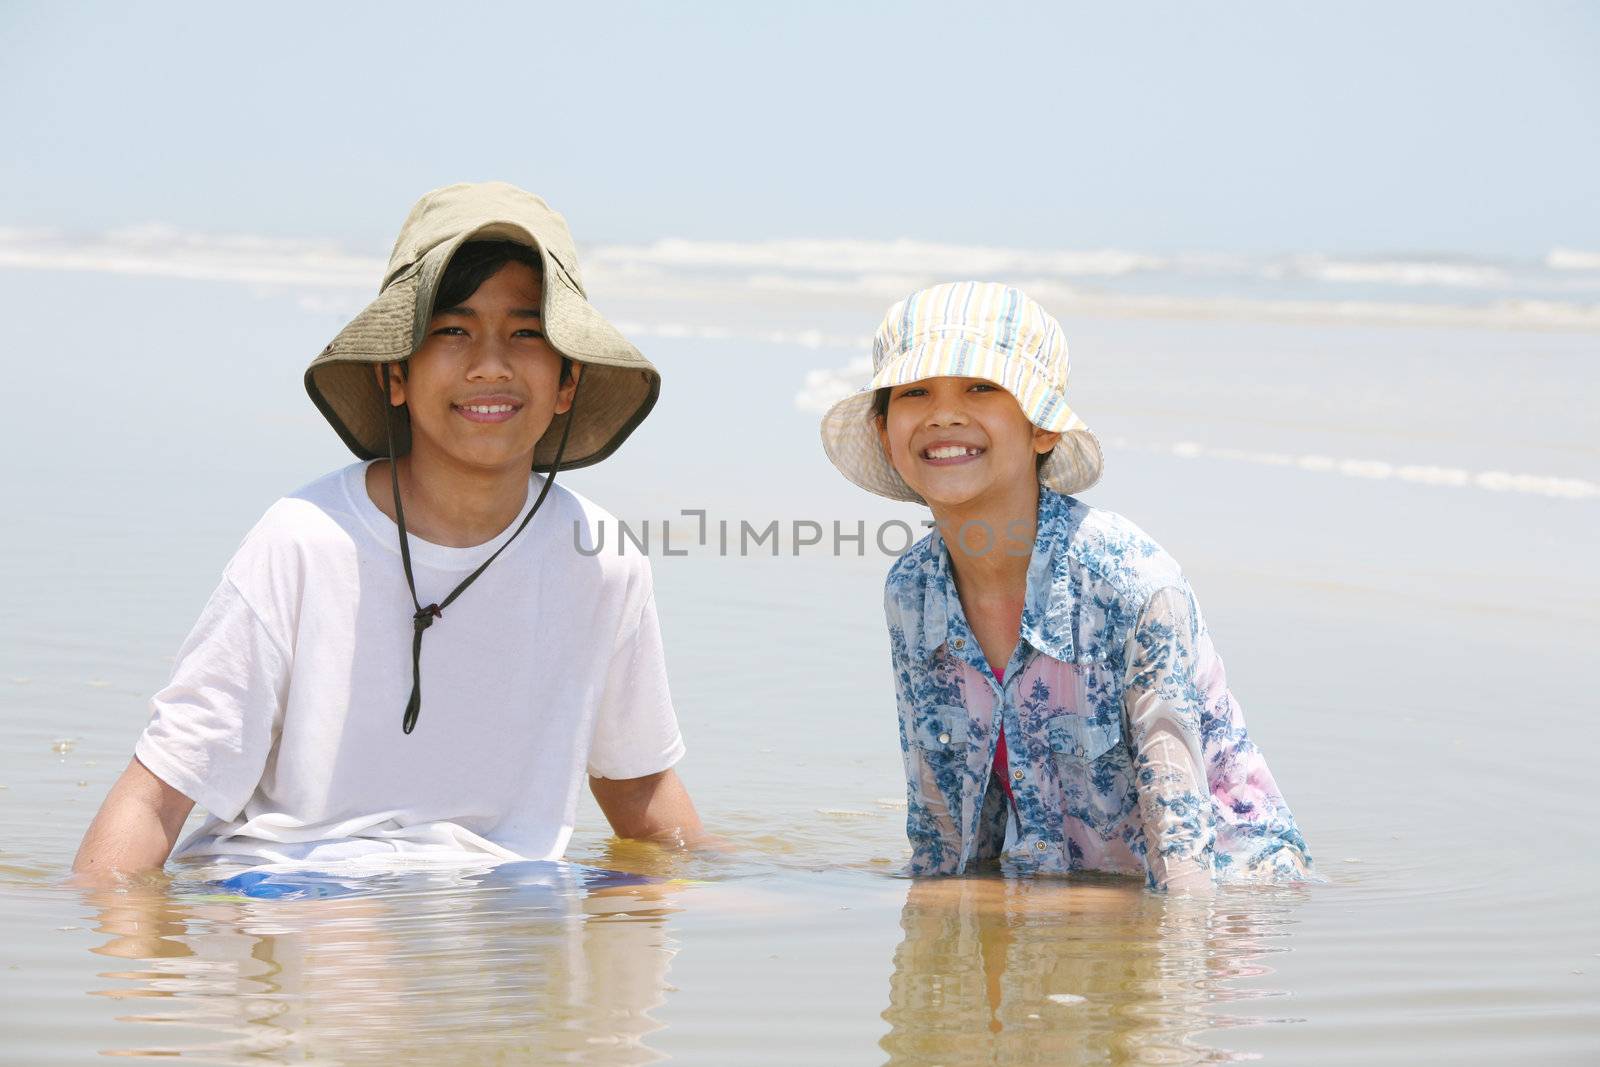 Two children enjoying the water at ocean shore